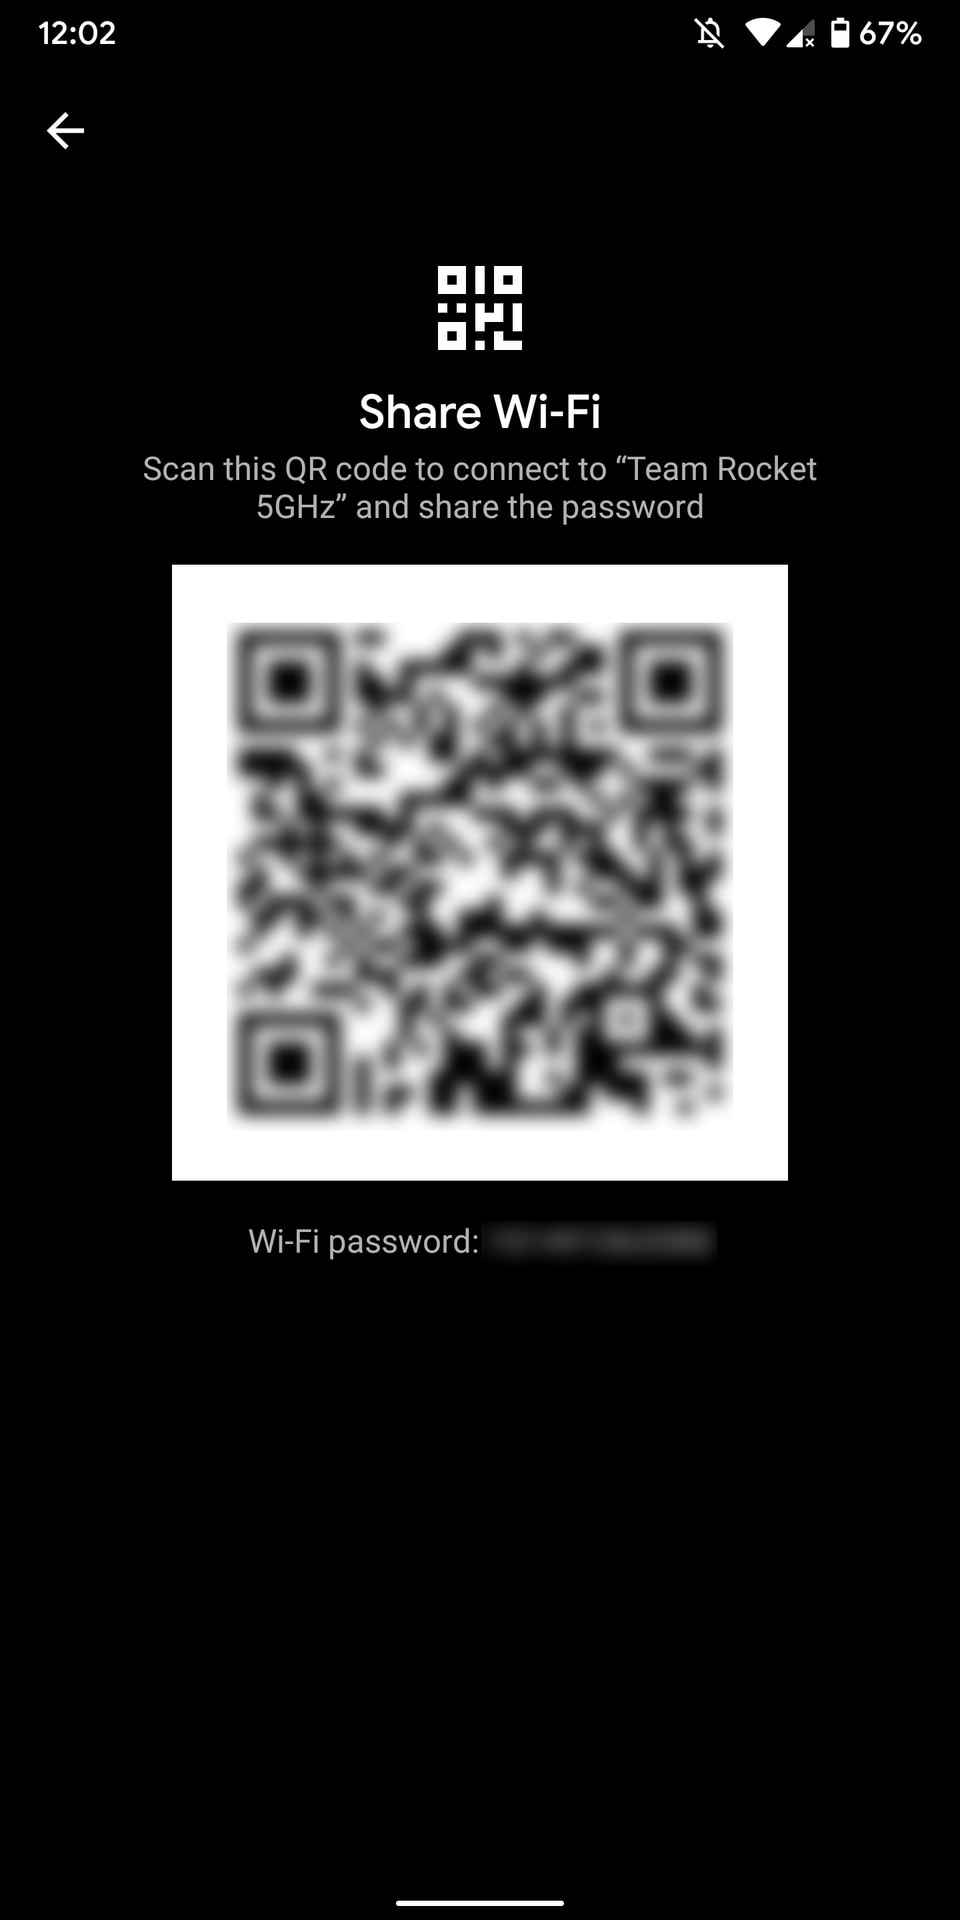 android q beta 3 screenshot wi-fi password in plain text